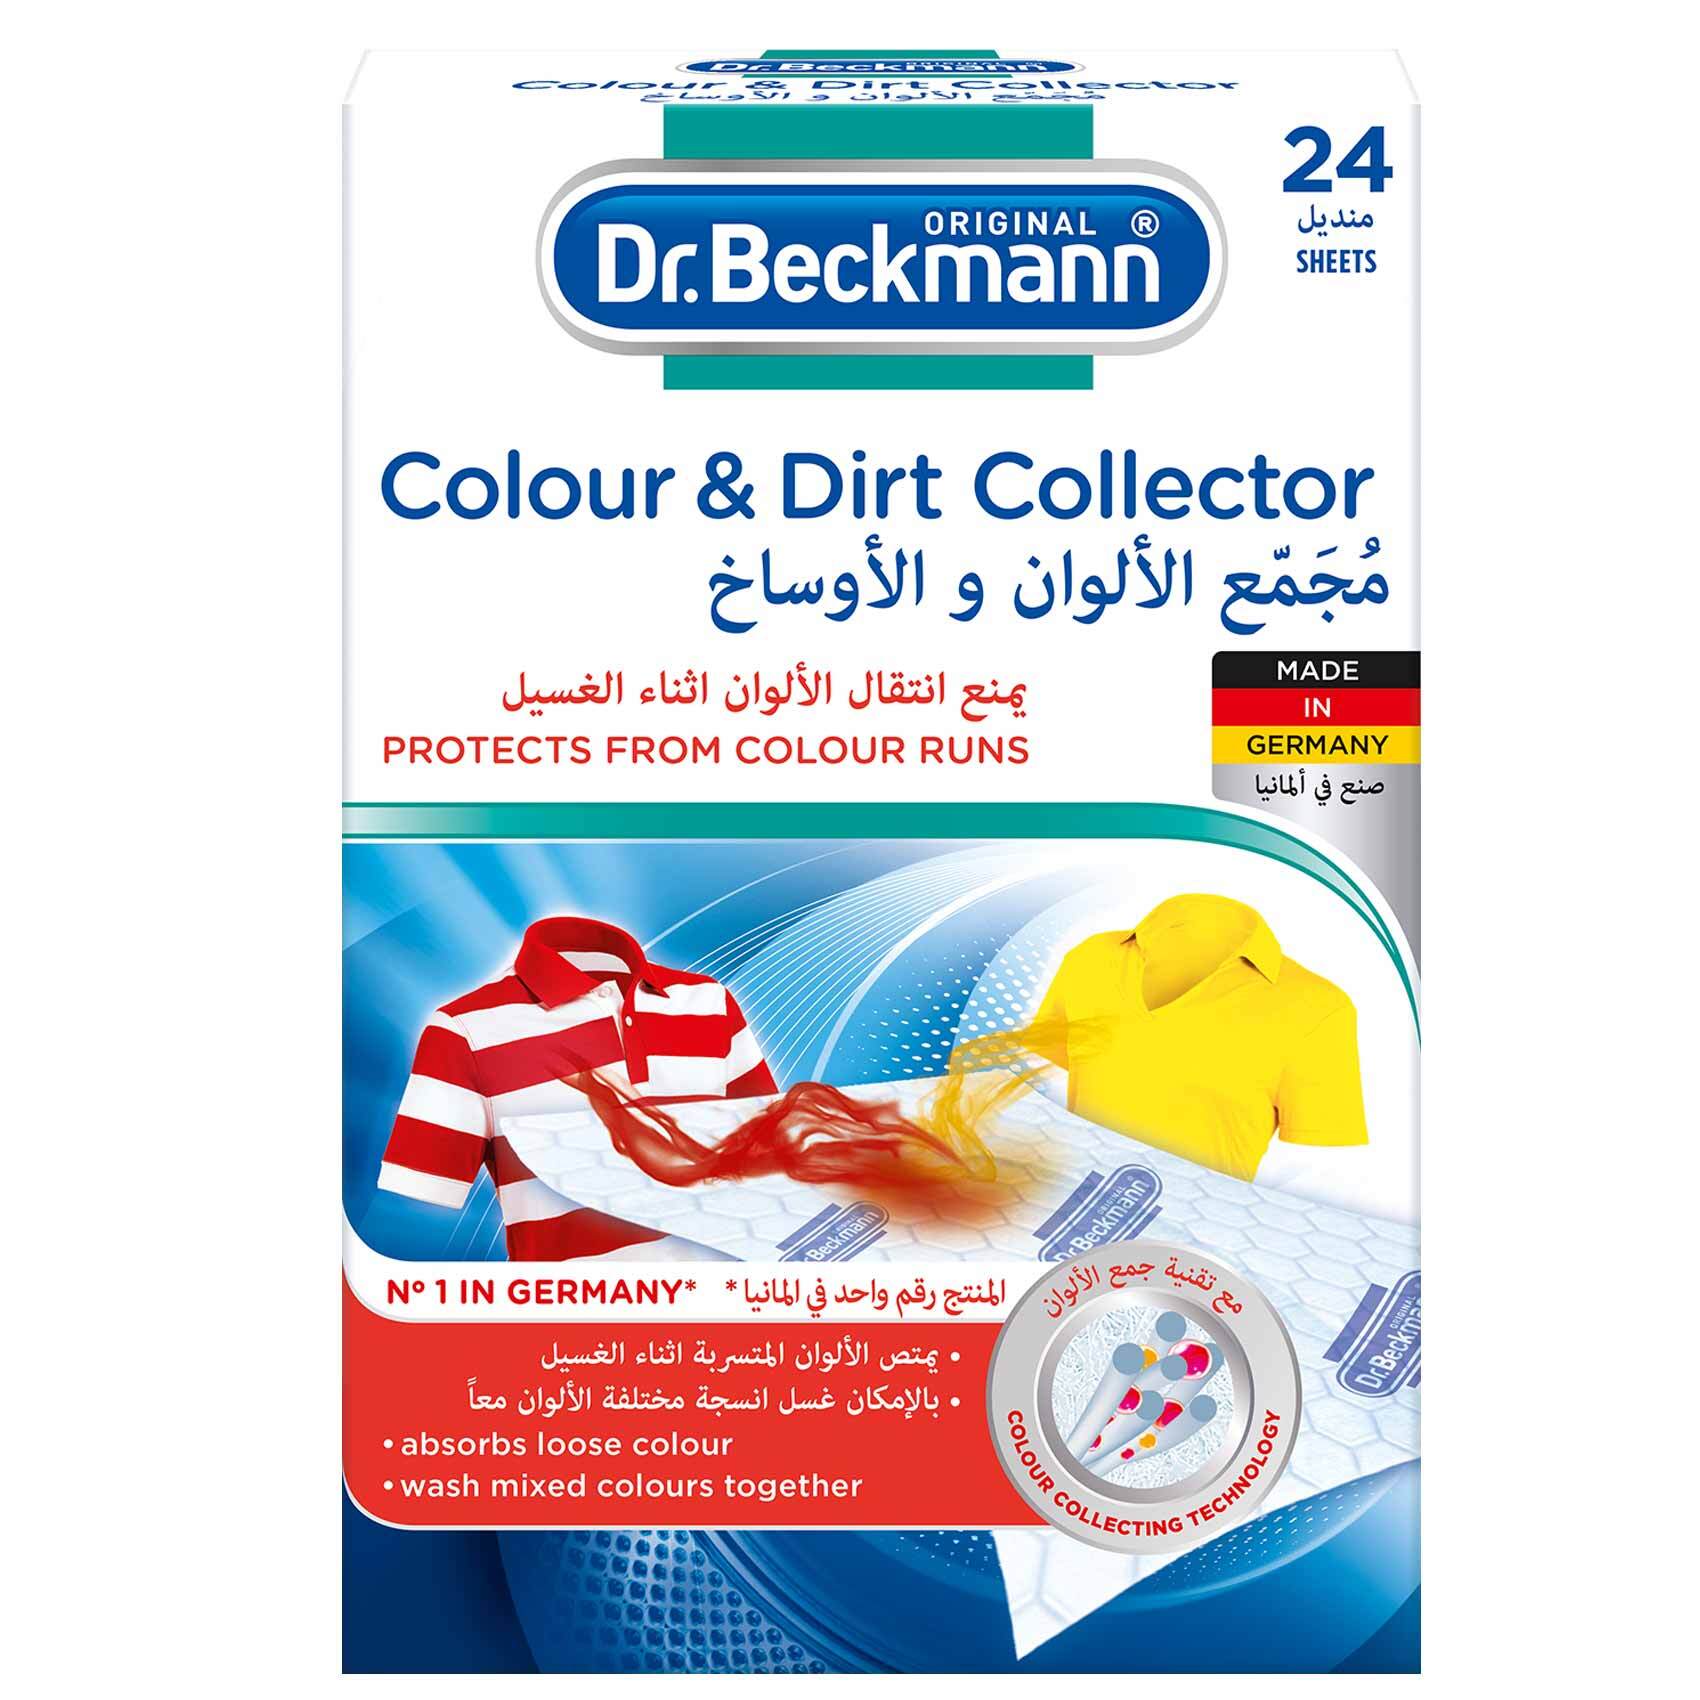 Dr. Beckmann Colour Run Remover,Restores Original Colour 75g